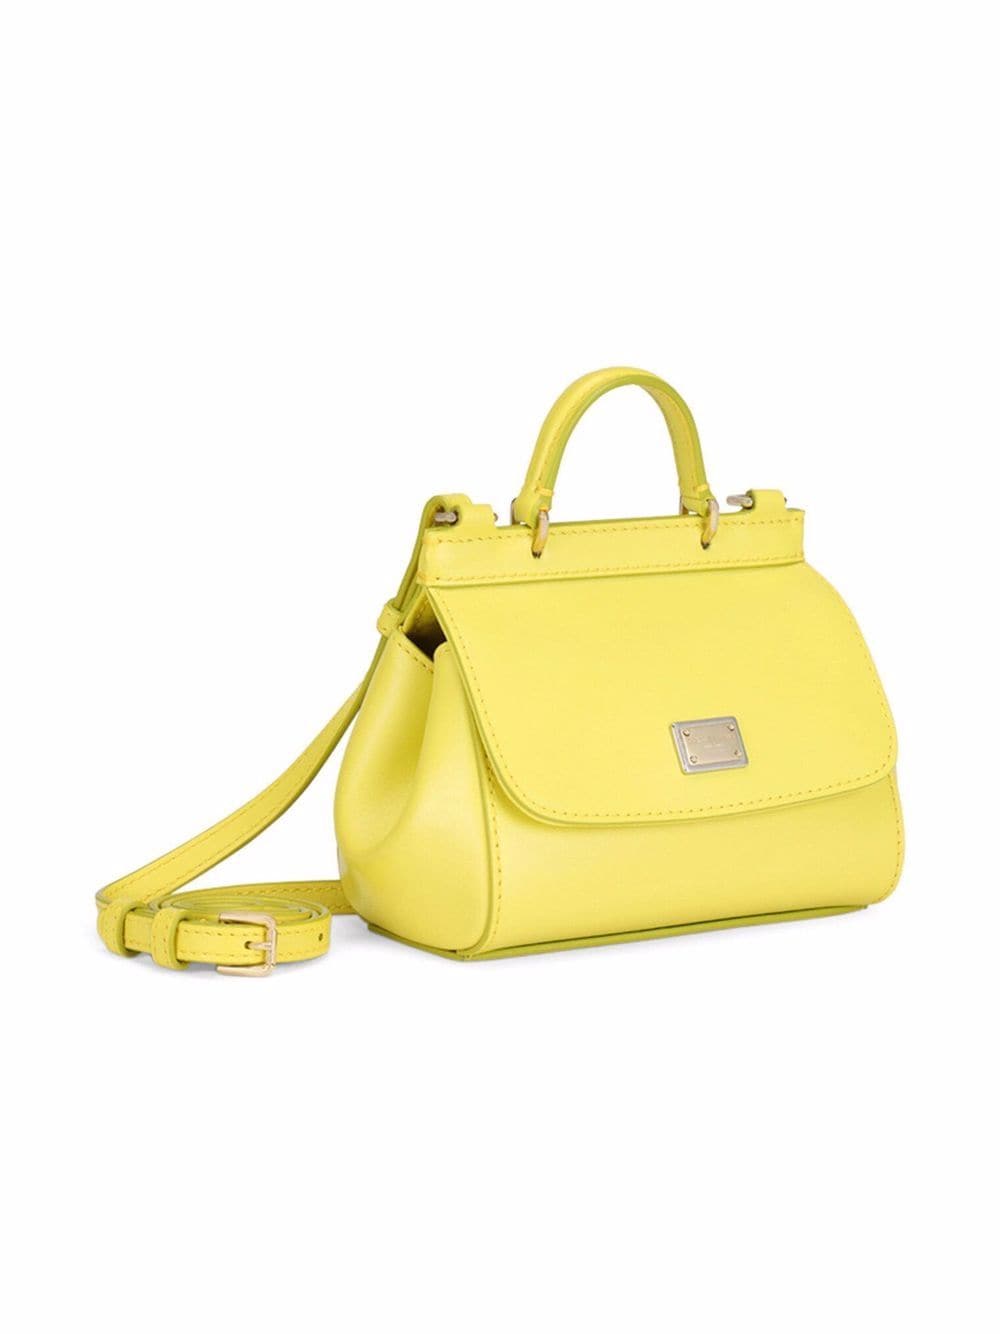 DOLCE & GABBANA KIDS Sicily Leather Shoulder Bag Yellow - MAISONDEFASHION.COM